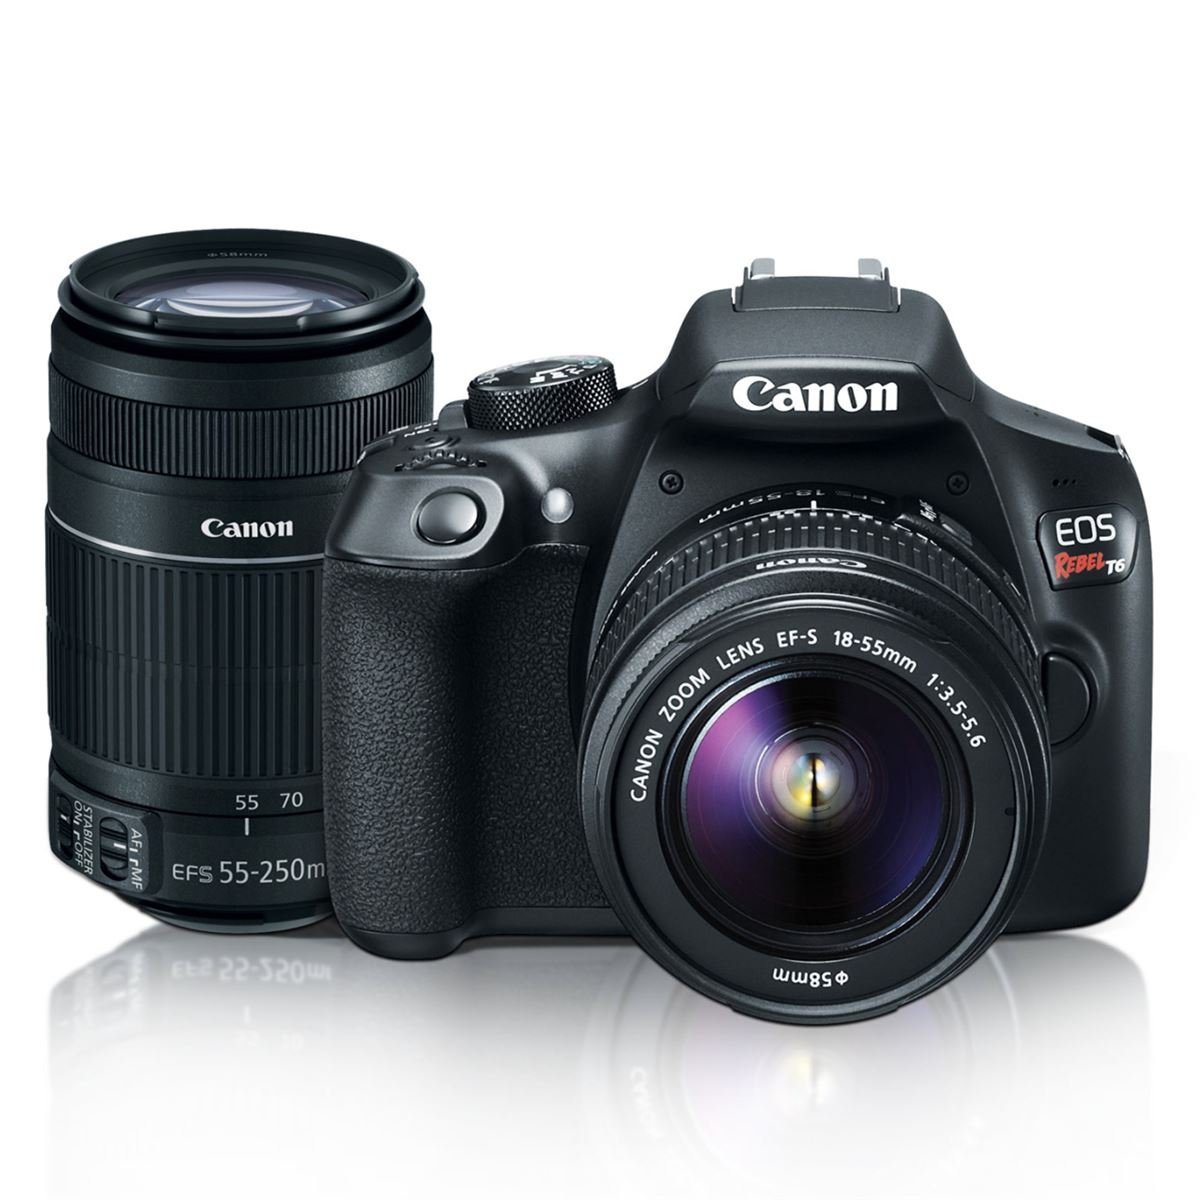 Cámara Canon EOS Rebel T6 + Lente EF-S 18-55 mm + Lente EF-S 55-250 mm IS